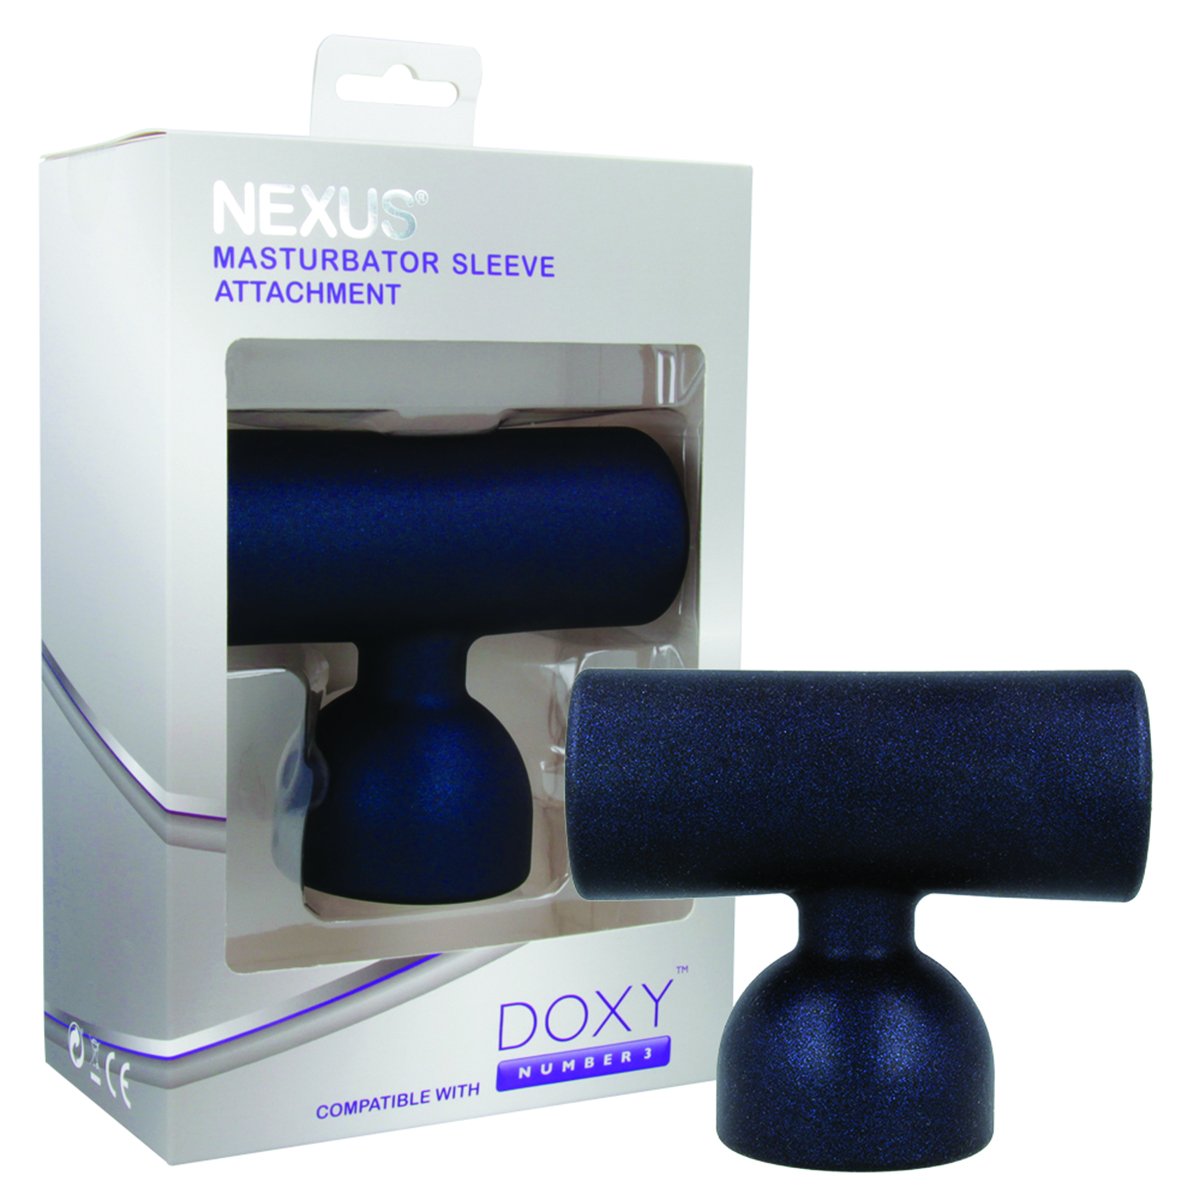 Doxy by Nexus Masturbator Attachment - Buy At Luxury Toy X - Free 3-Day Shipping